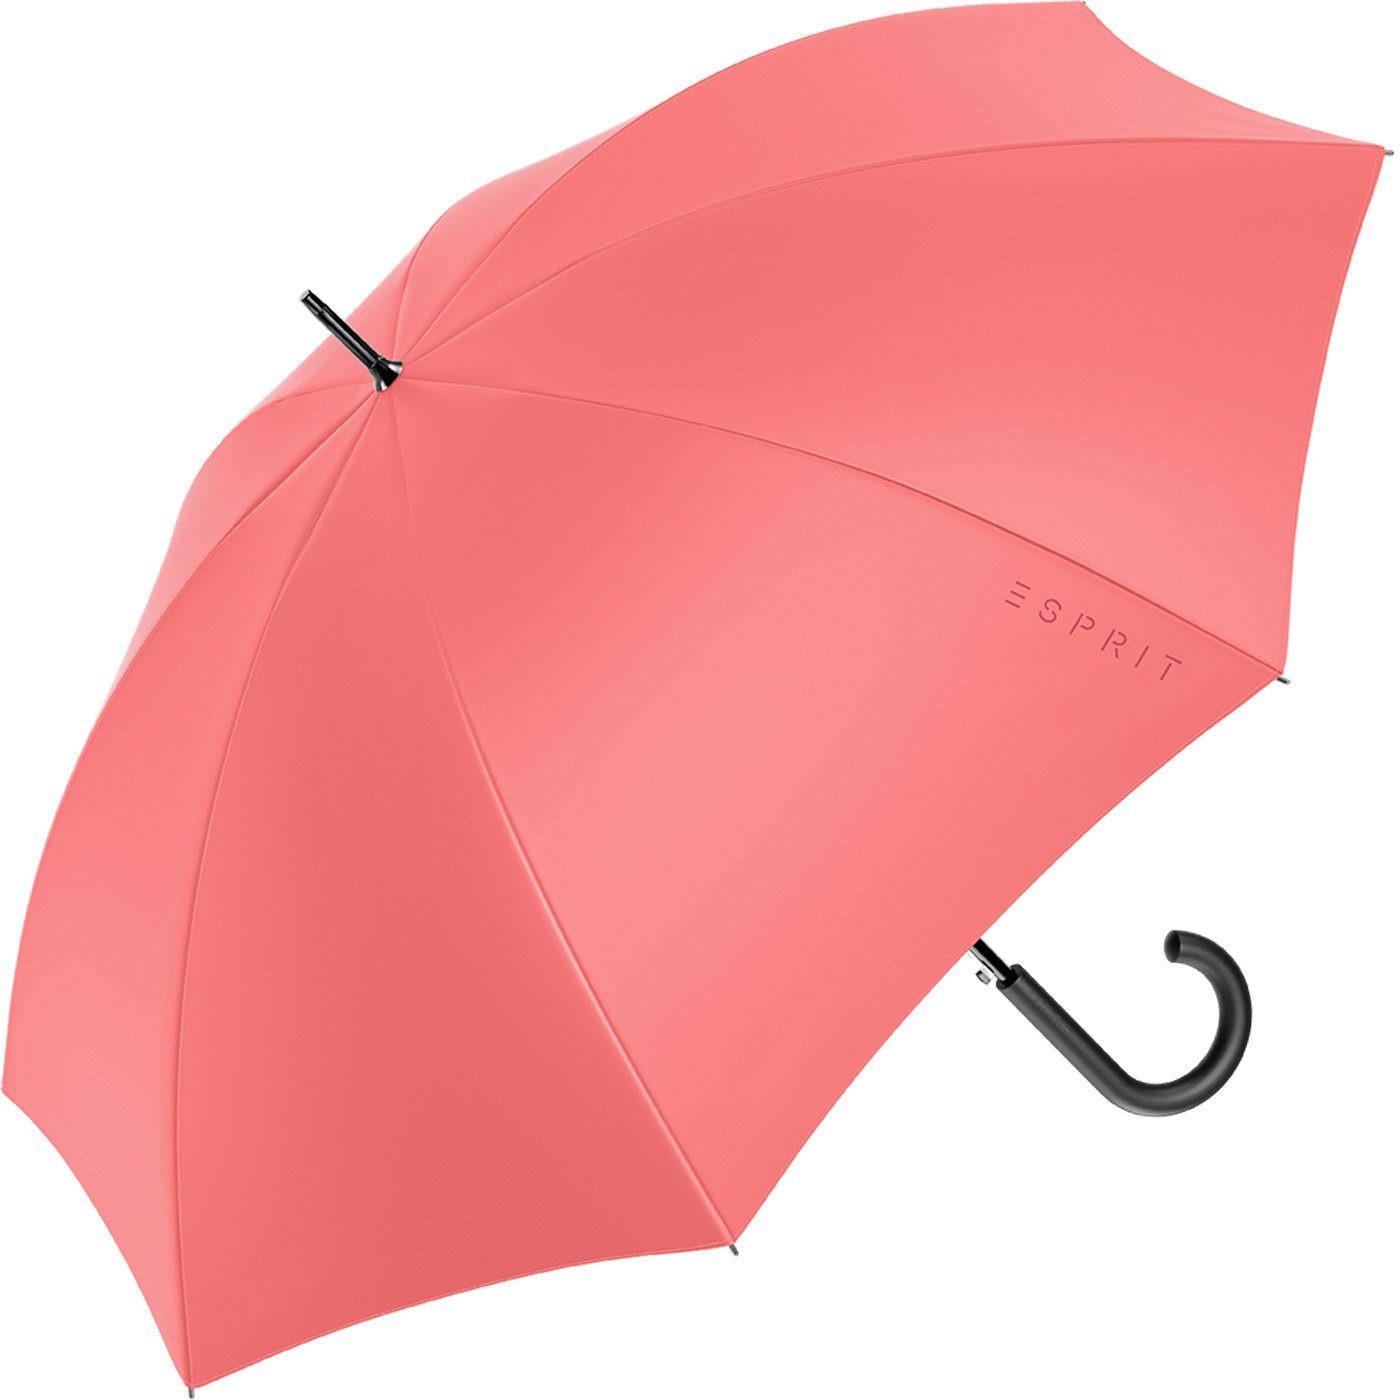 FJ den und mit groß Automatik in Langregenschirm stabil, Trendfarben Esprit 2023, Damen-Regenschirm koralle